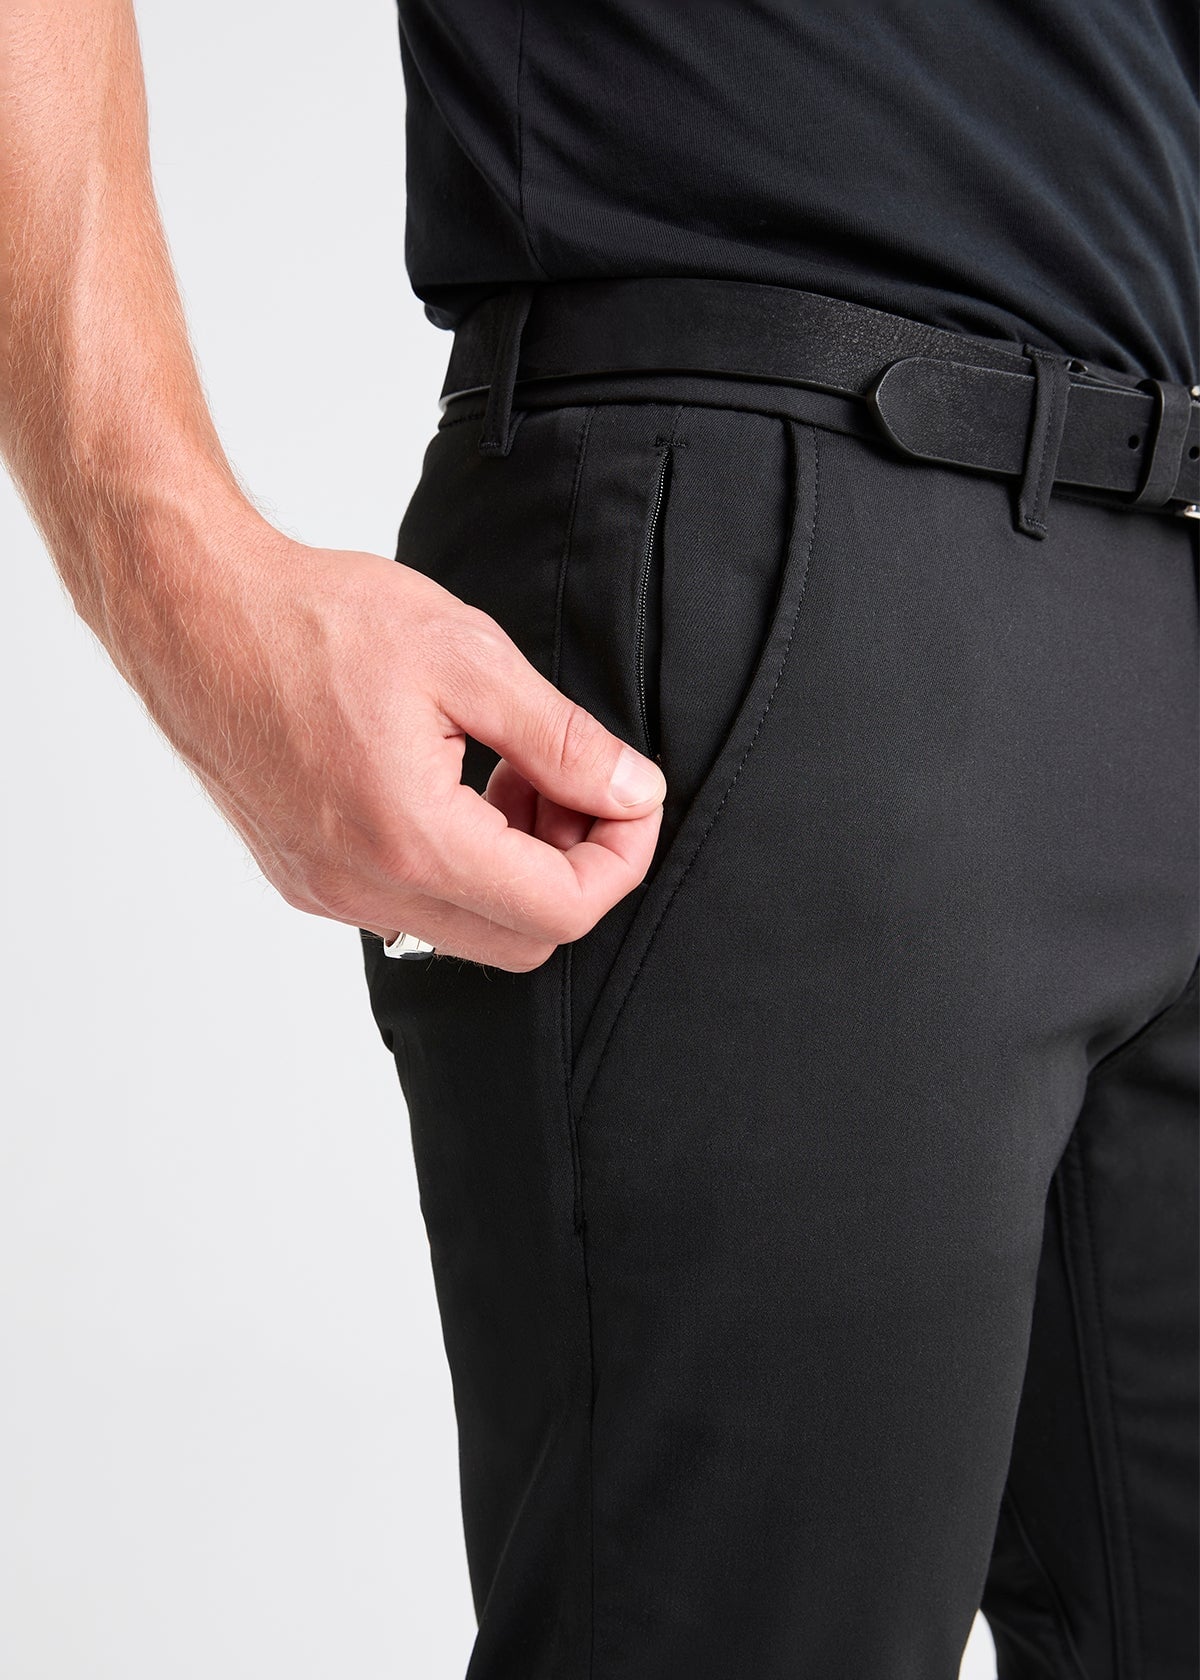 Girdle slimming pants Black XS/S